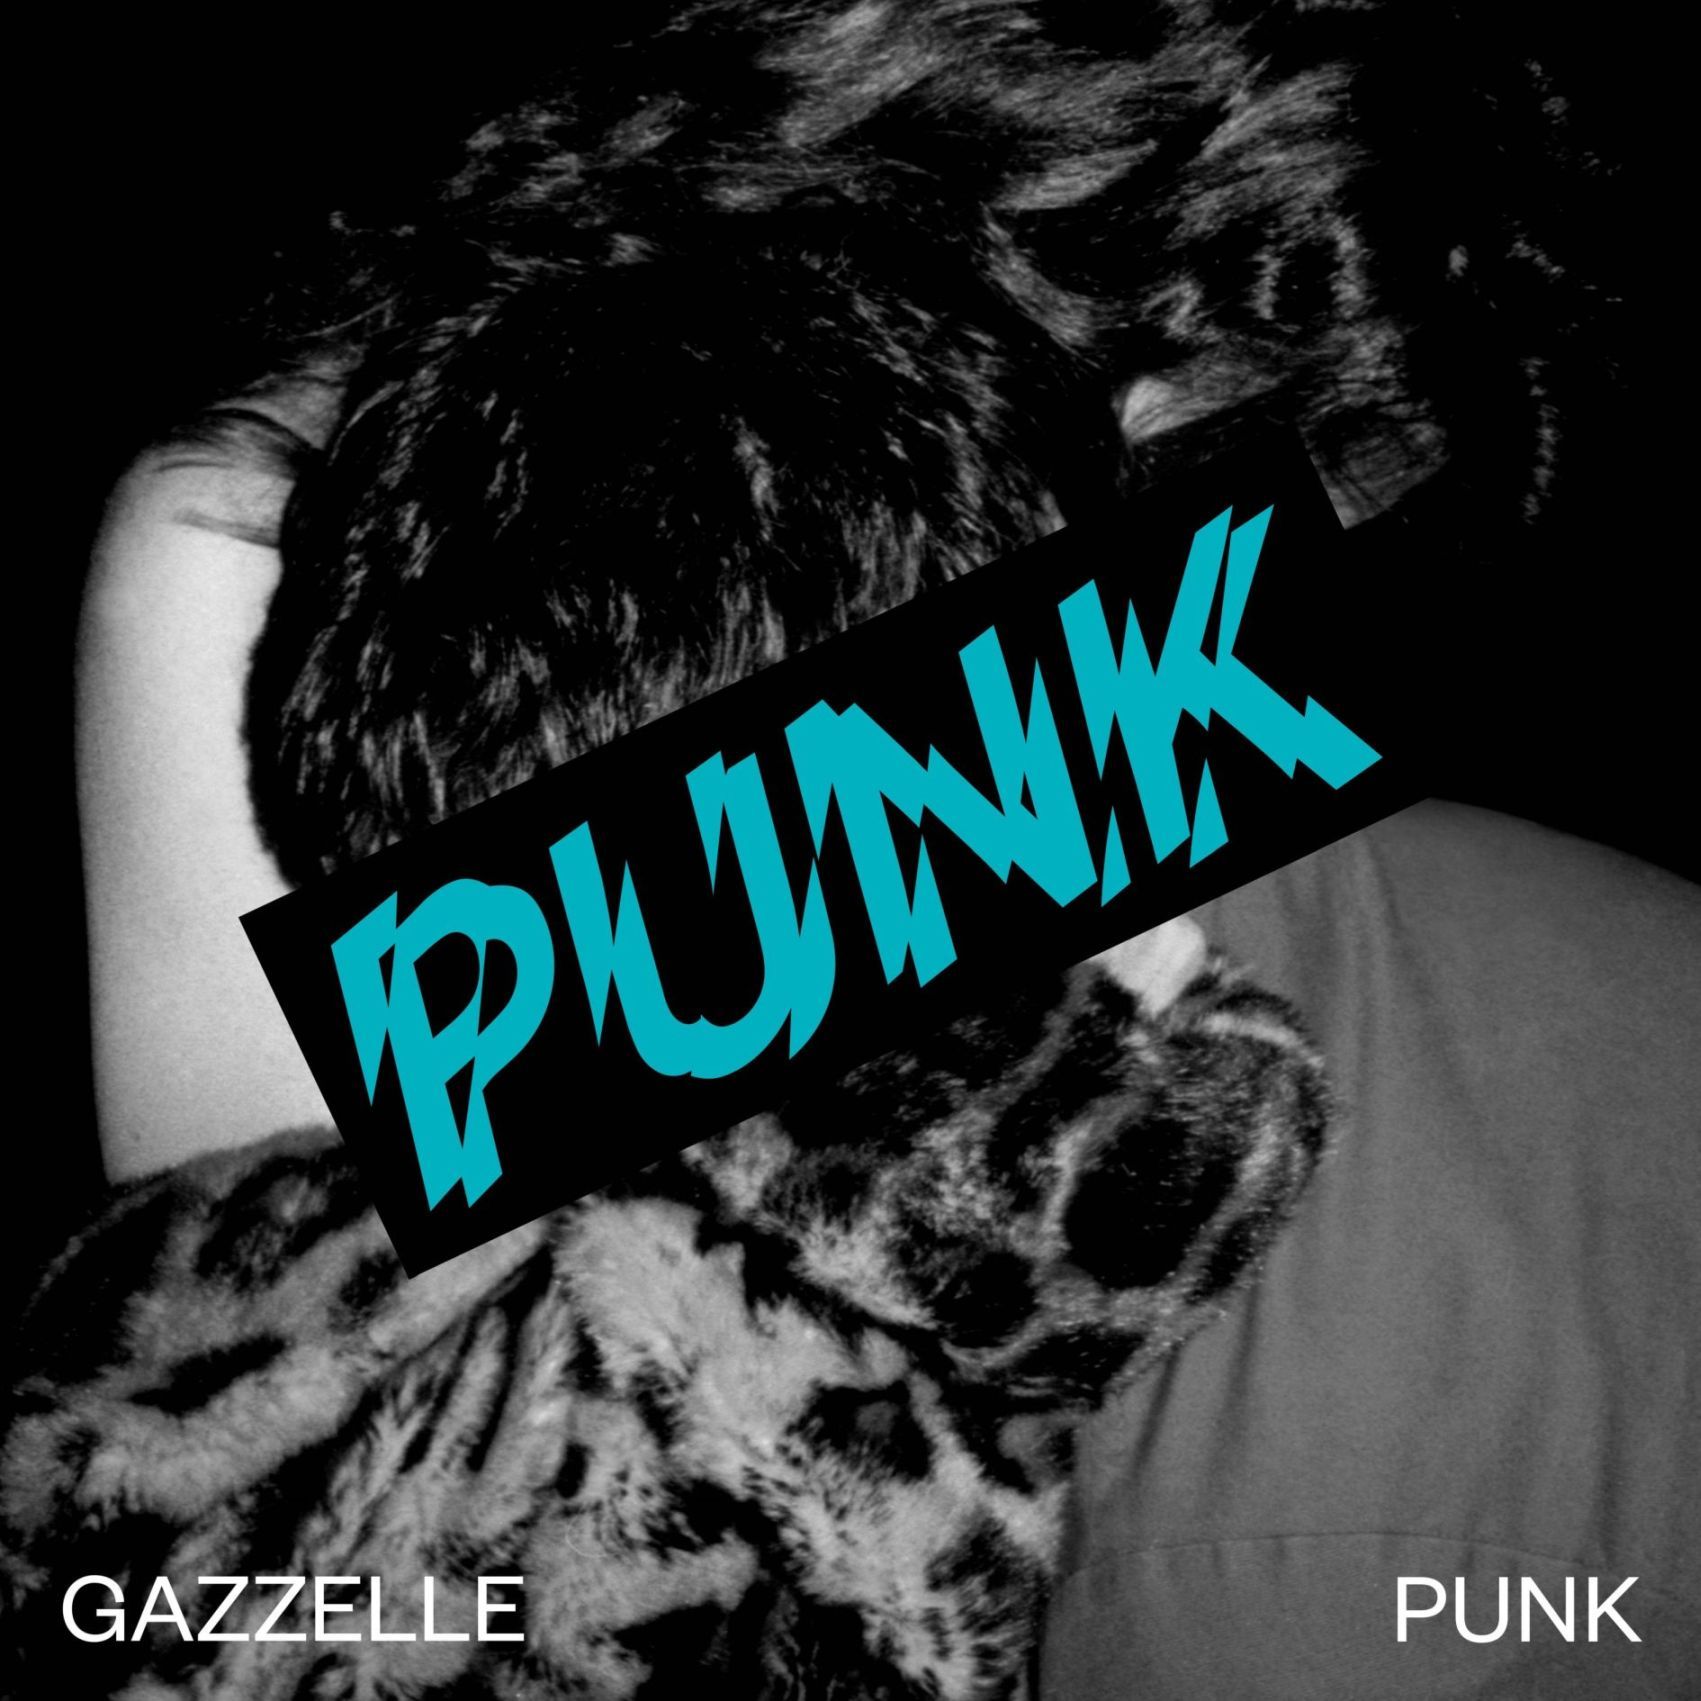 Gazzelle Punk